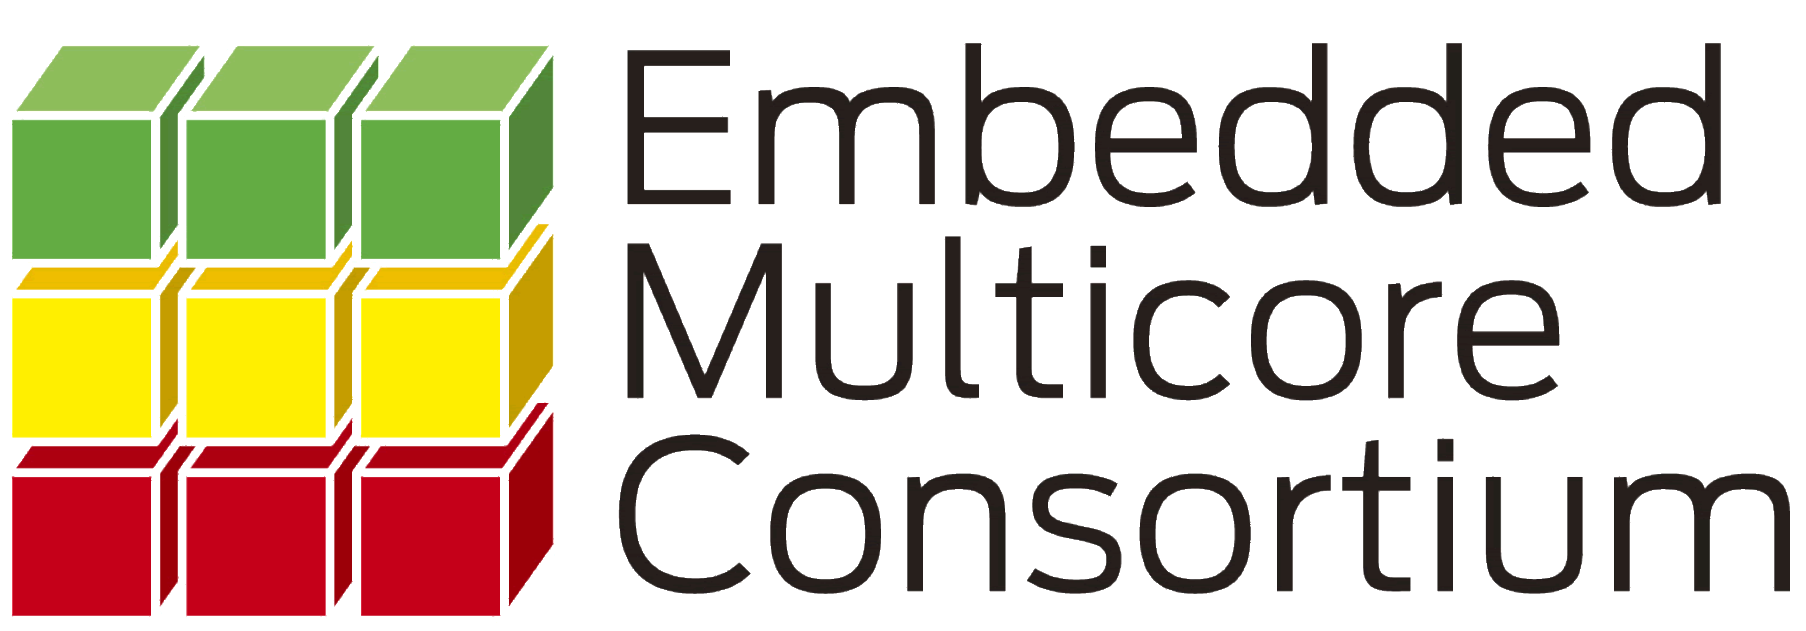 Embedded Multicore Consortium